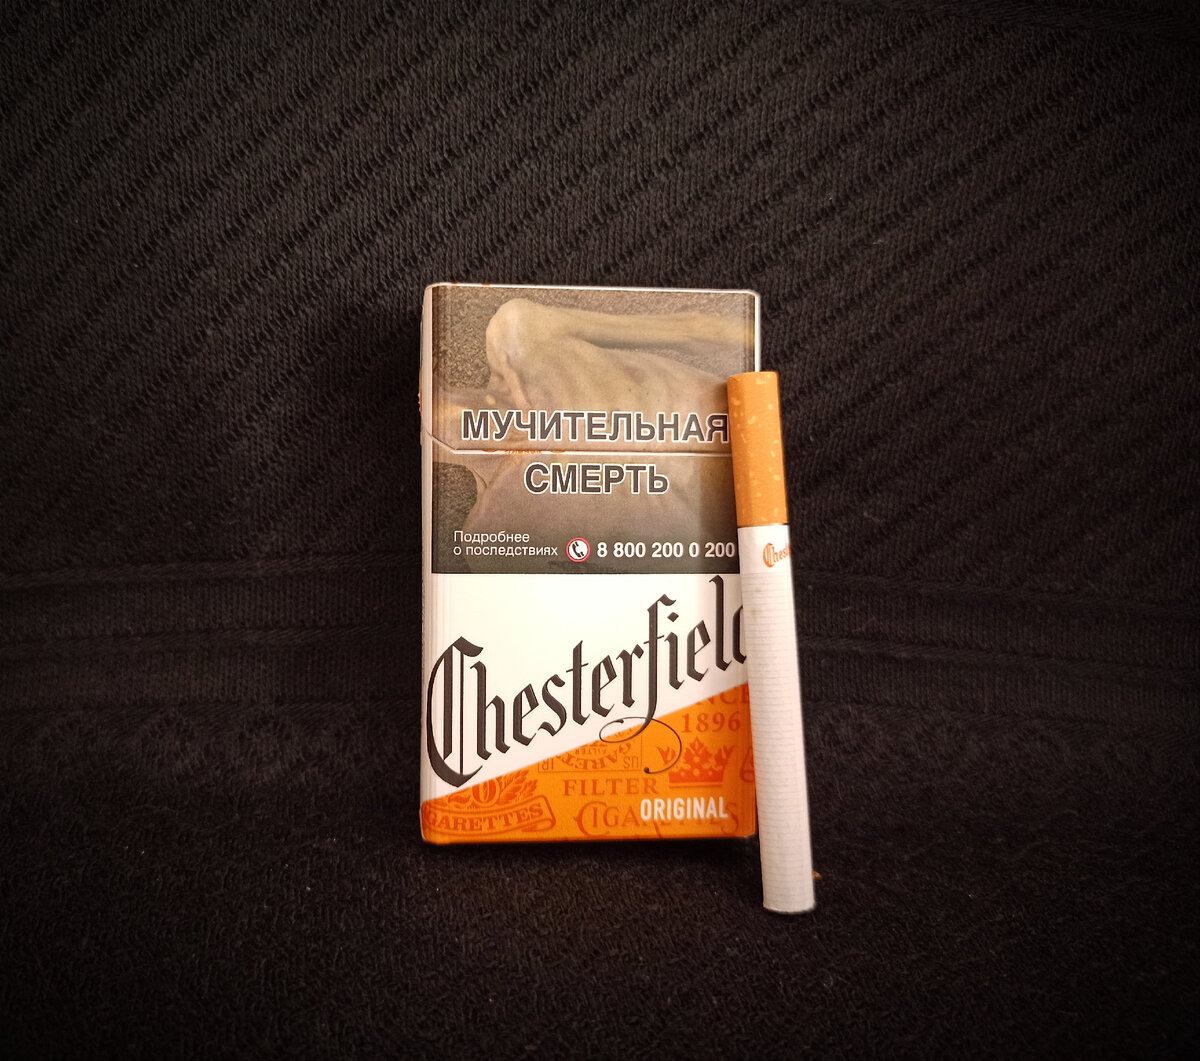 Честер шоколад сигареты. Сигареты Честерфилд Original. Chesterfield Original оранжевый. Сигареты Честерфилд оригинал оранжевый. Сигареты Честерфилд Селекшн компакт.